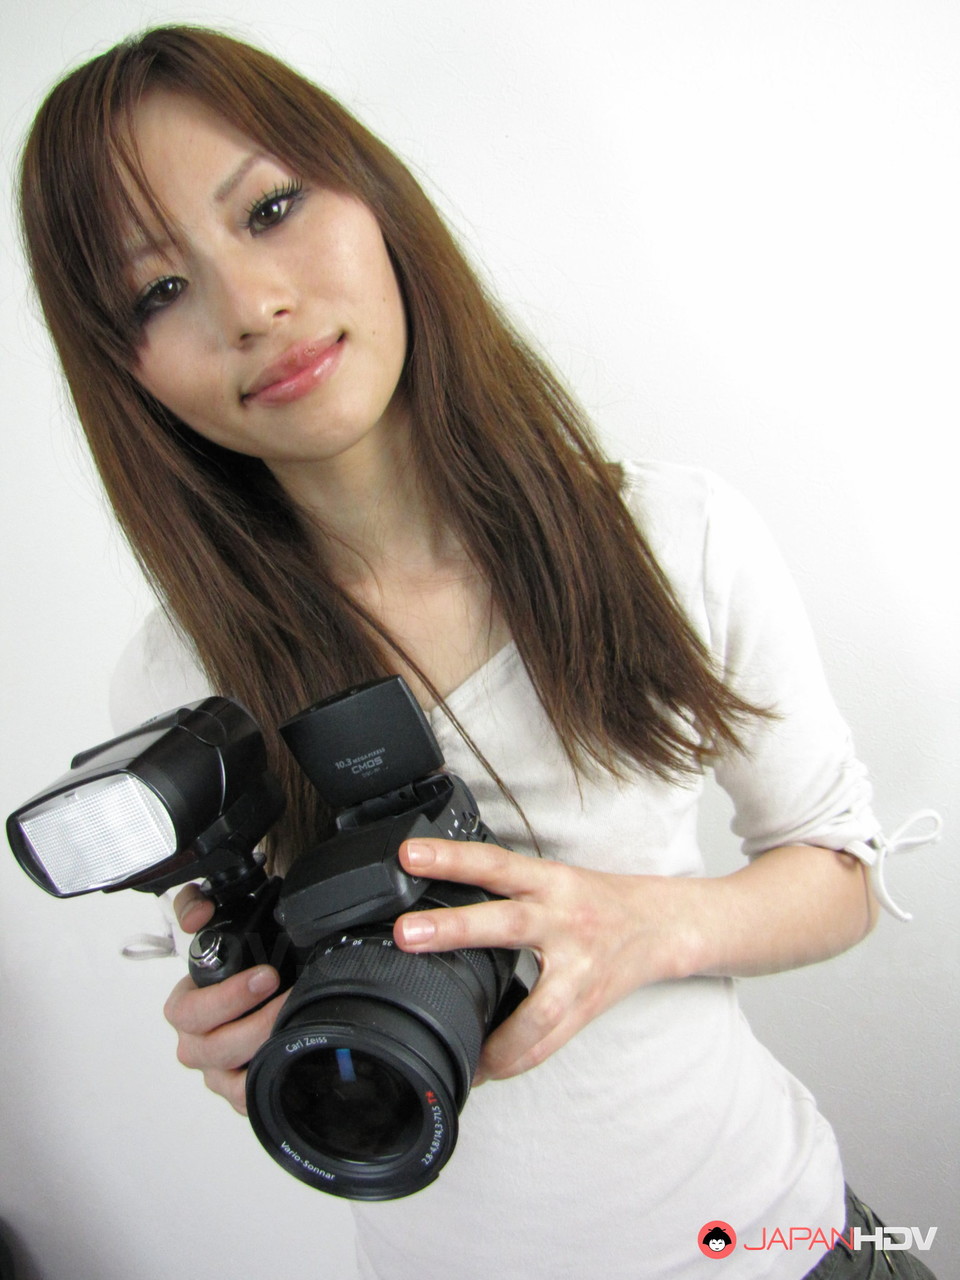 Amateur Japanese girl Shiho Goto enjoys a foursome with her mother zdjęcie porno #424847762 | Japan HDV Pics, Shiho Goto, Japanese, mobilne porno